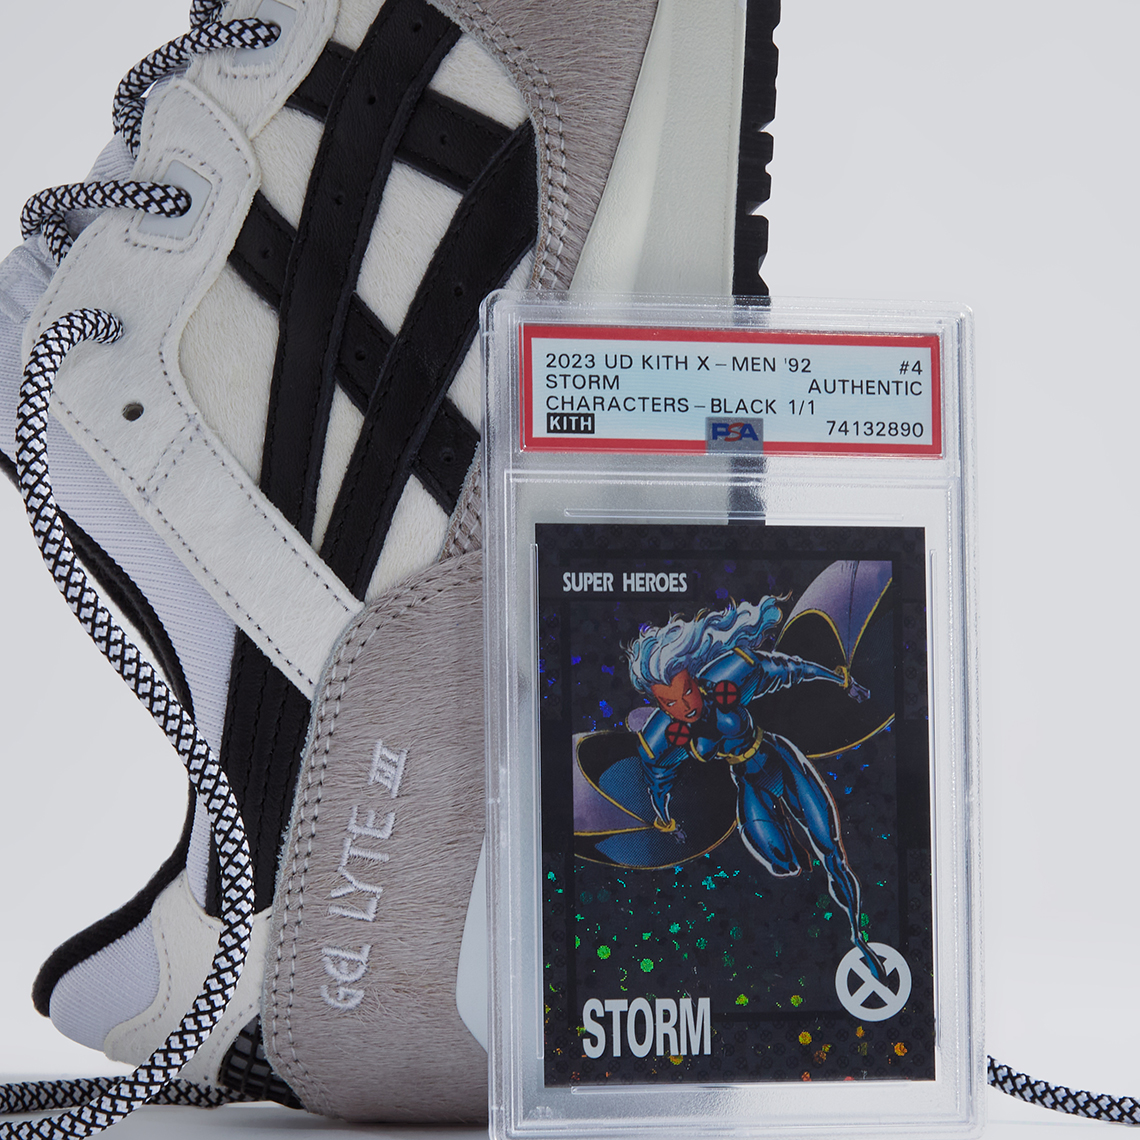 X Men Kith Asics Gel Lyte Iii Storm 2